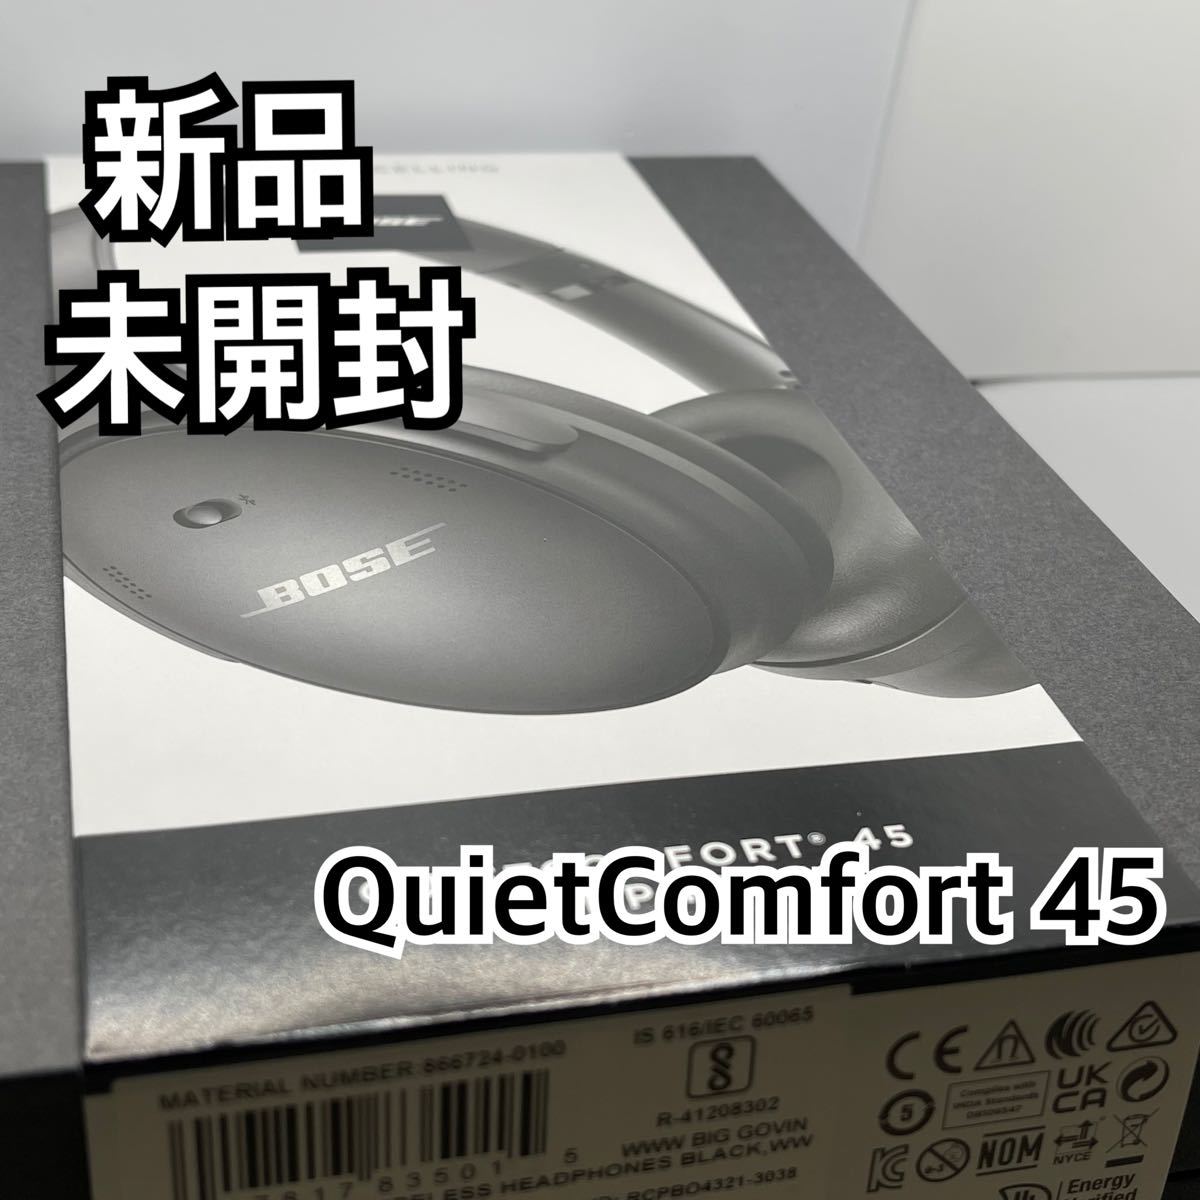 BOSE QuietComfort 45 headphones [ブラック]（¥29,000） sler.com.br